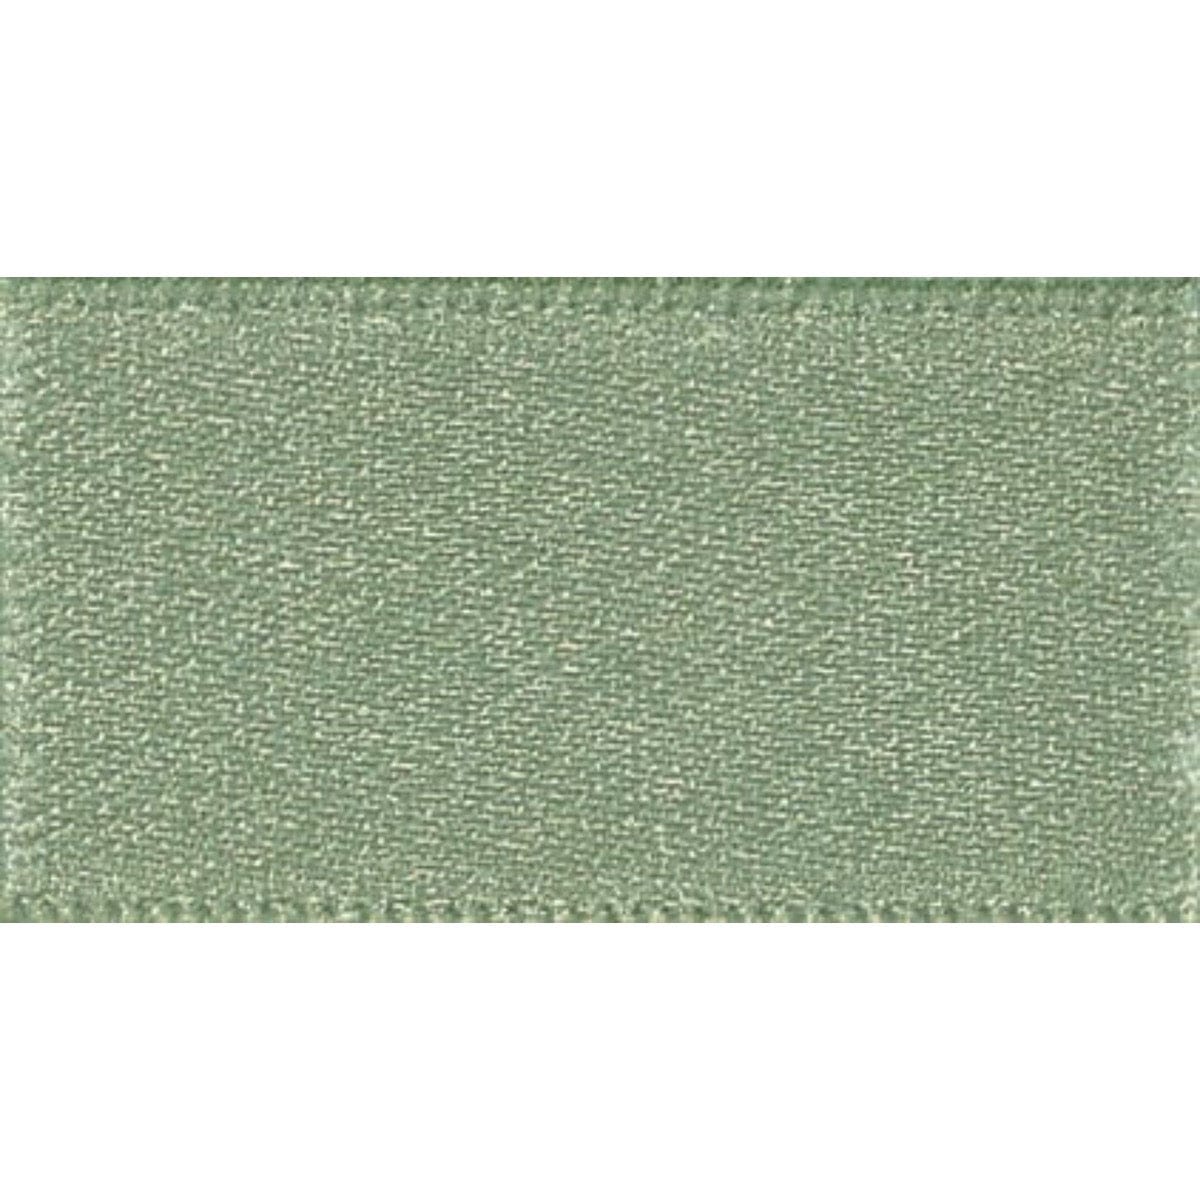 Double Faced Satin Ribbon Khaki Green: 7mm Wide. Price per metre.